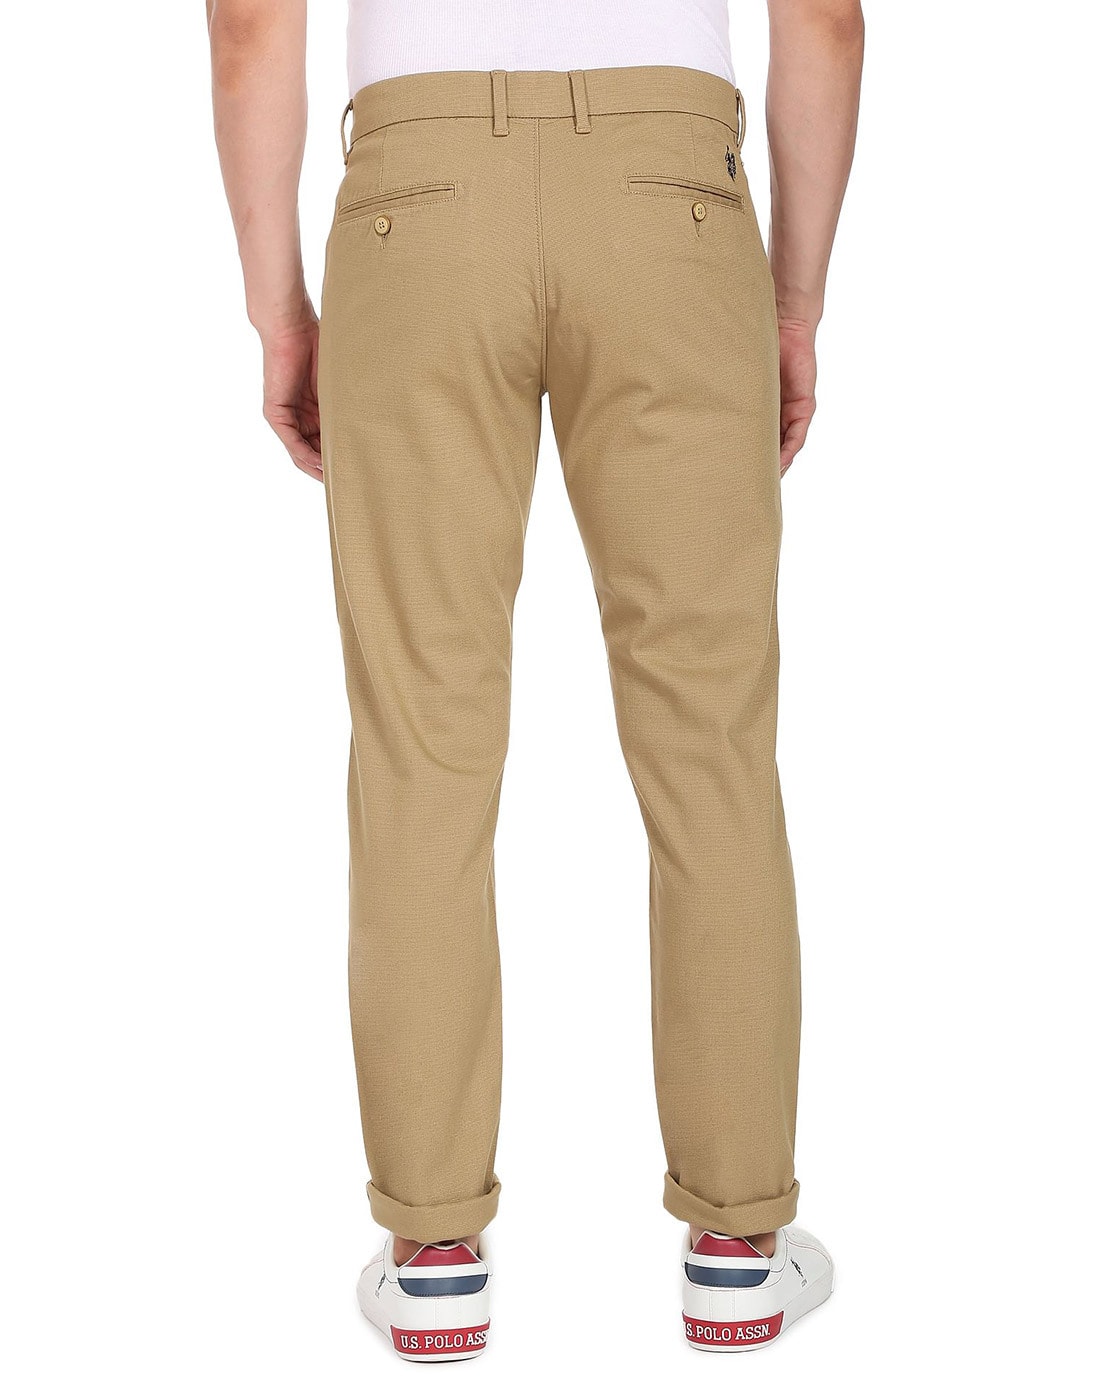 U.S. Polo Assn. Pajama pants | Mercari